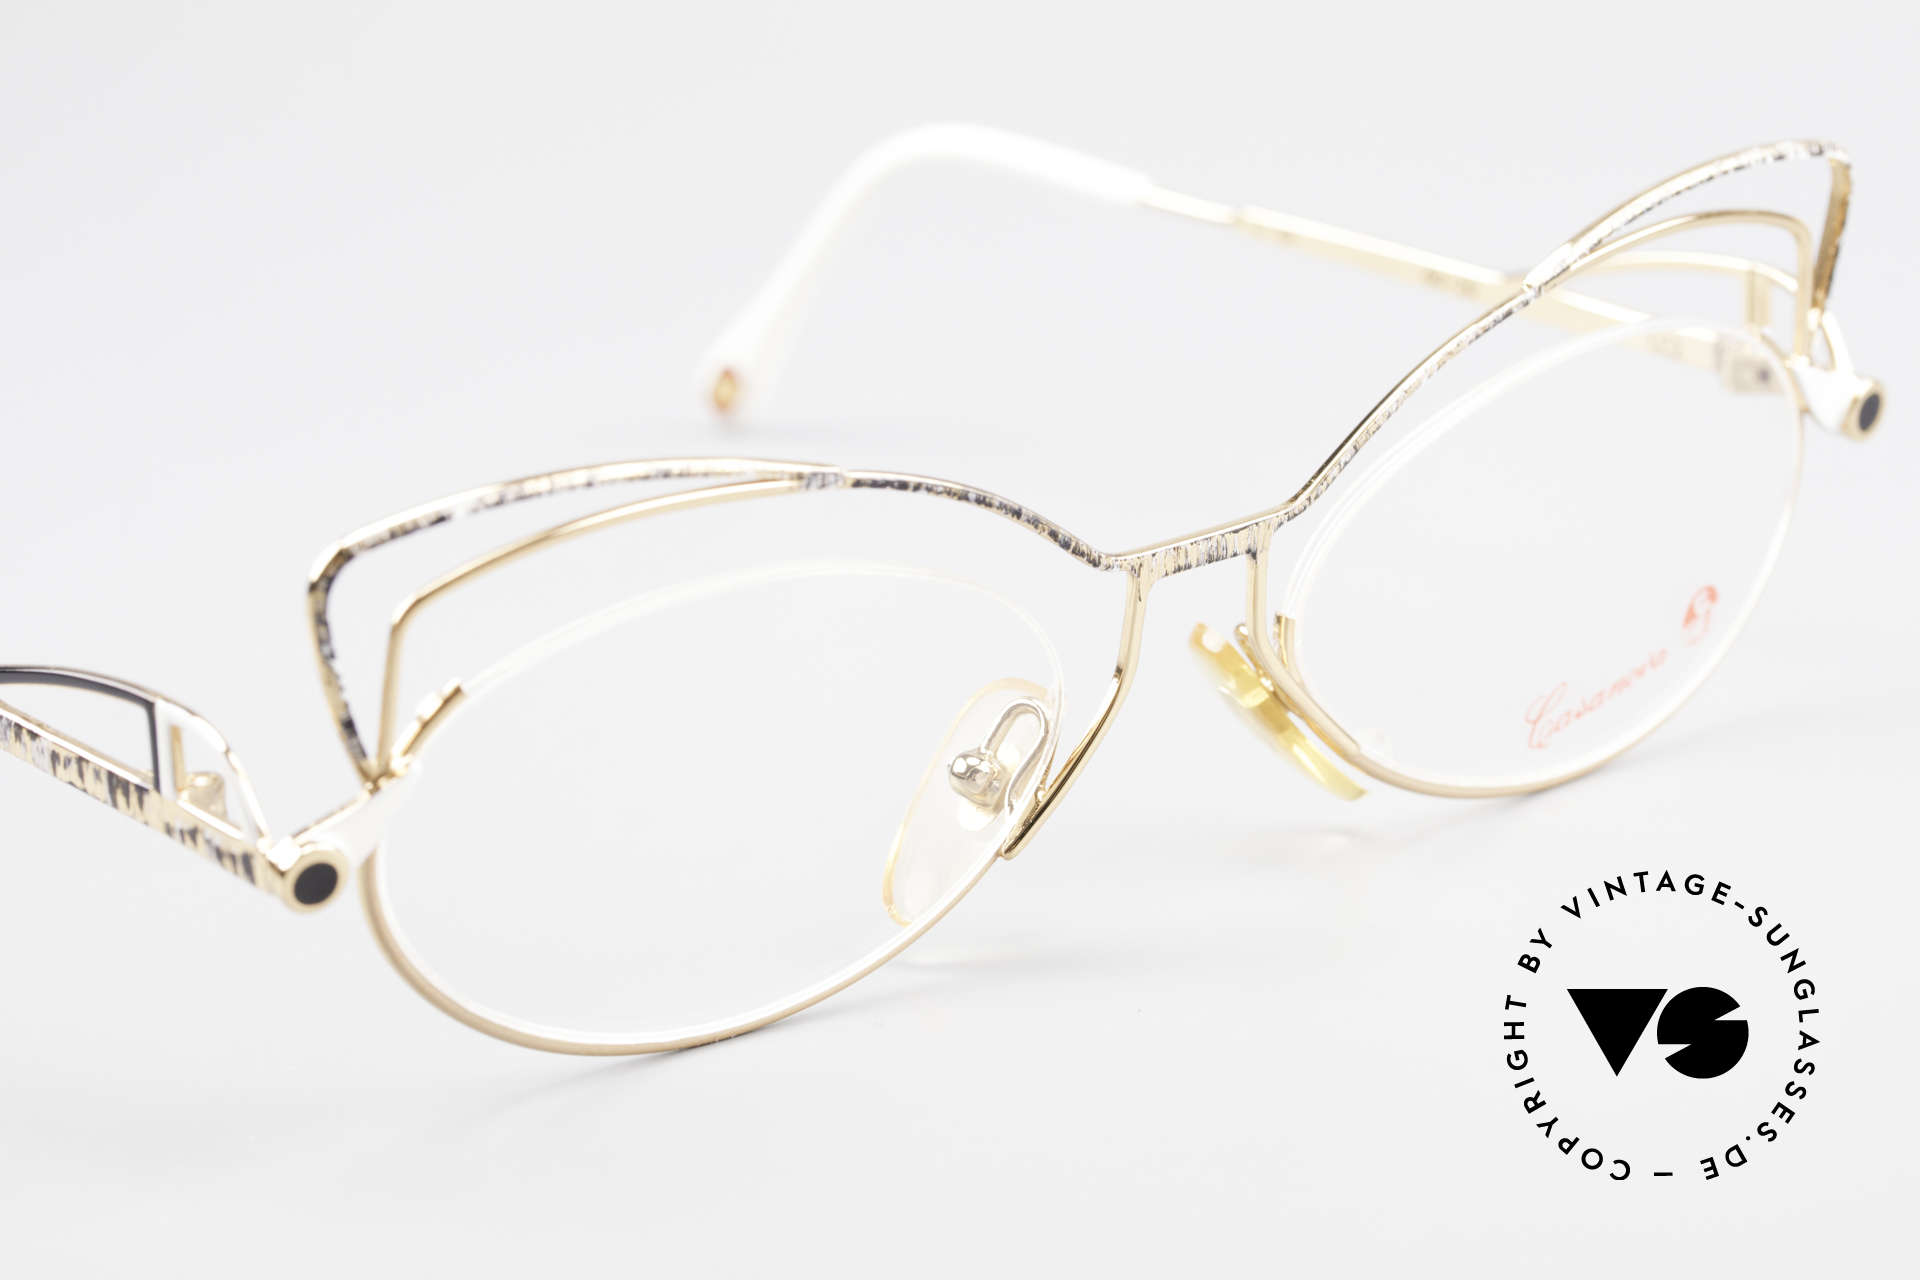 Casanova LC2 Enchanting Ladies Eyeglasses, NOS - unworn (like all our artistic vintage eyeglasses), Made for Women